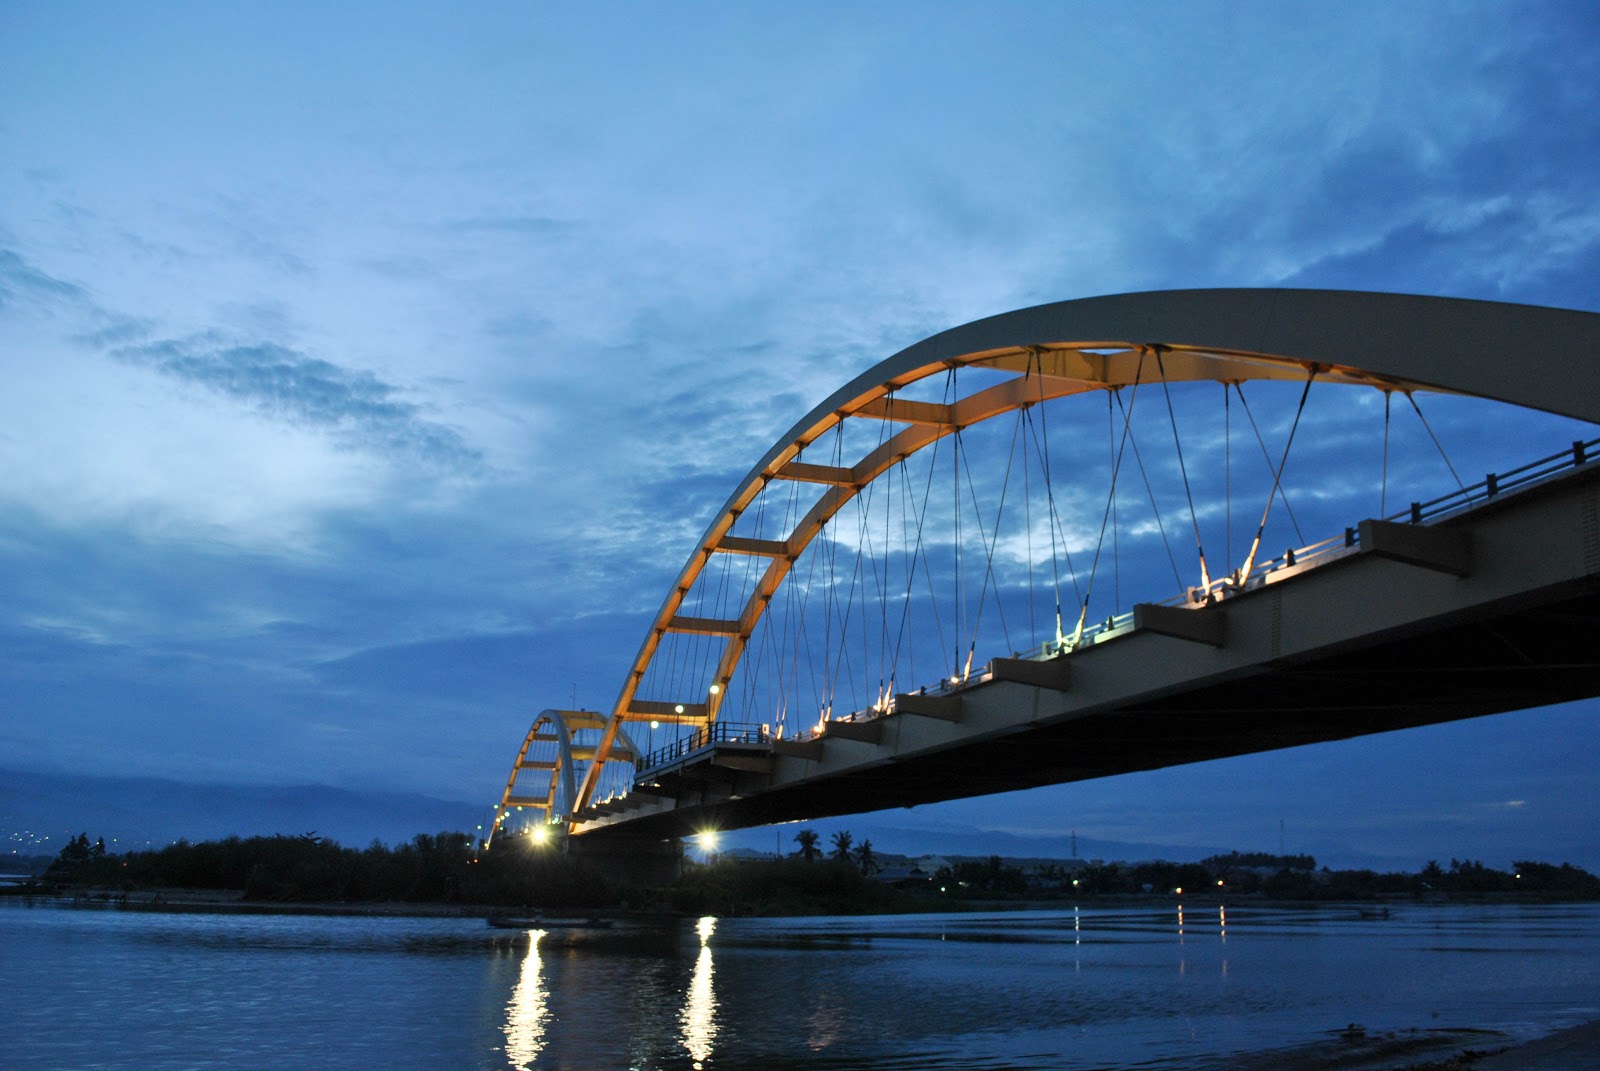 Jembatan ponulele jadi icon nya kota palu ~ FORESTER UNTAD 